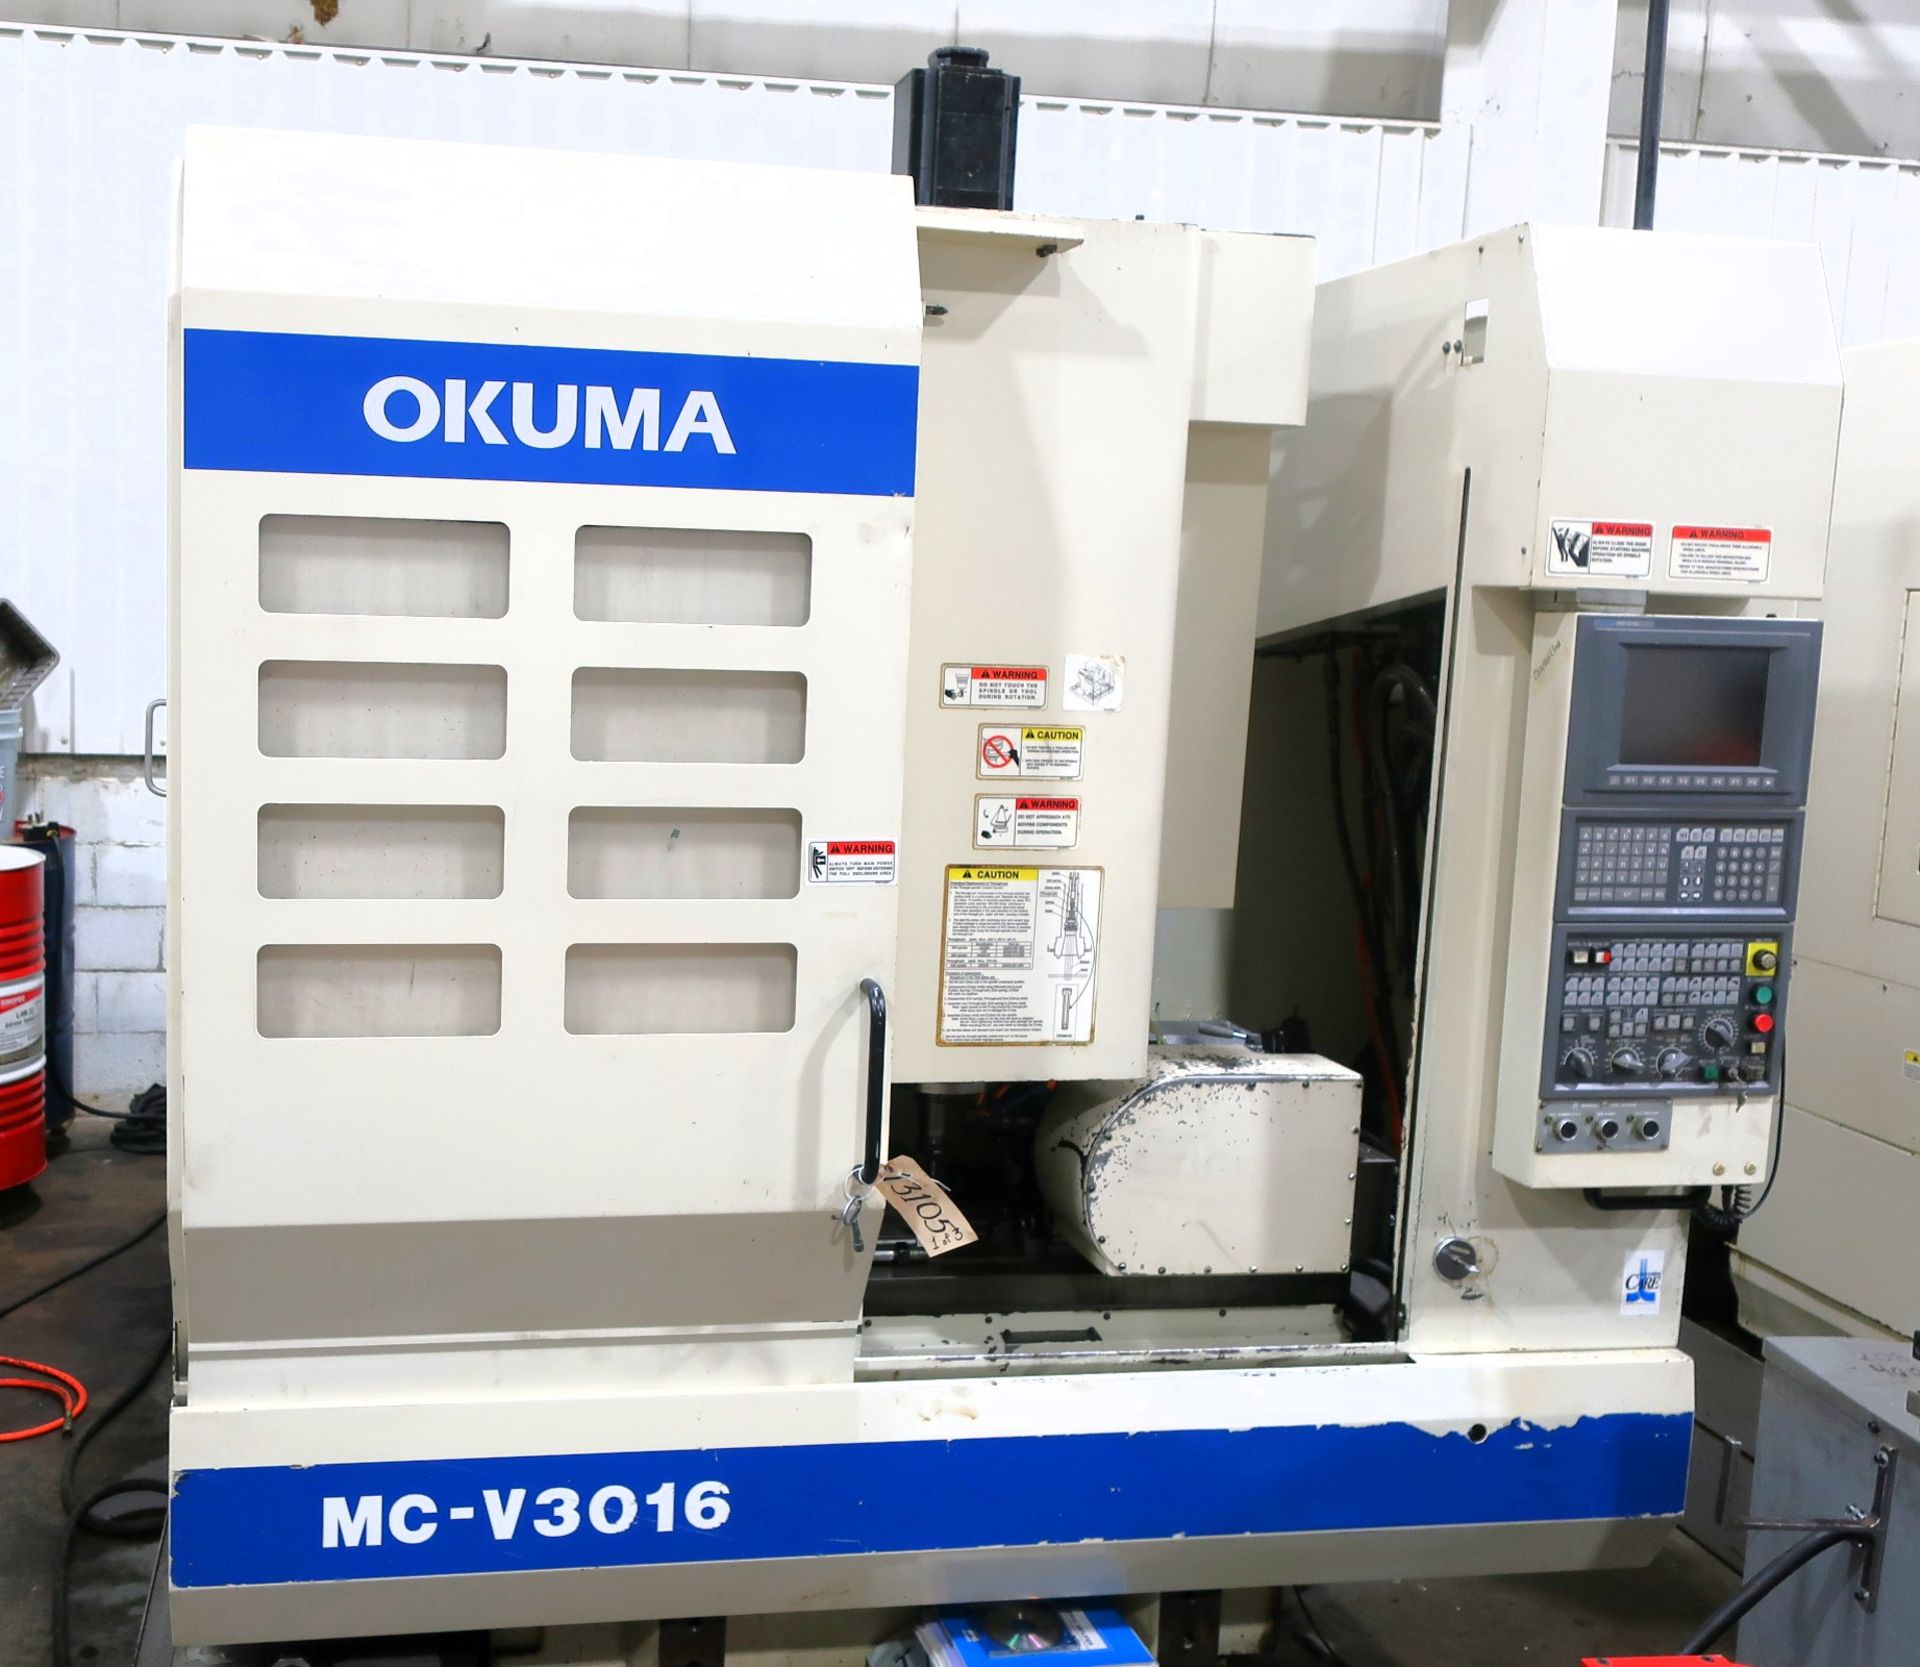 Okuma MC-V3016 5-Axis CNC Vertical Machining Center, S/N 0038, New 2003